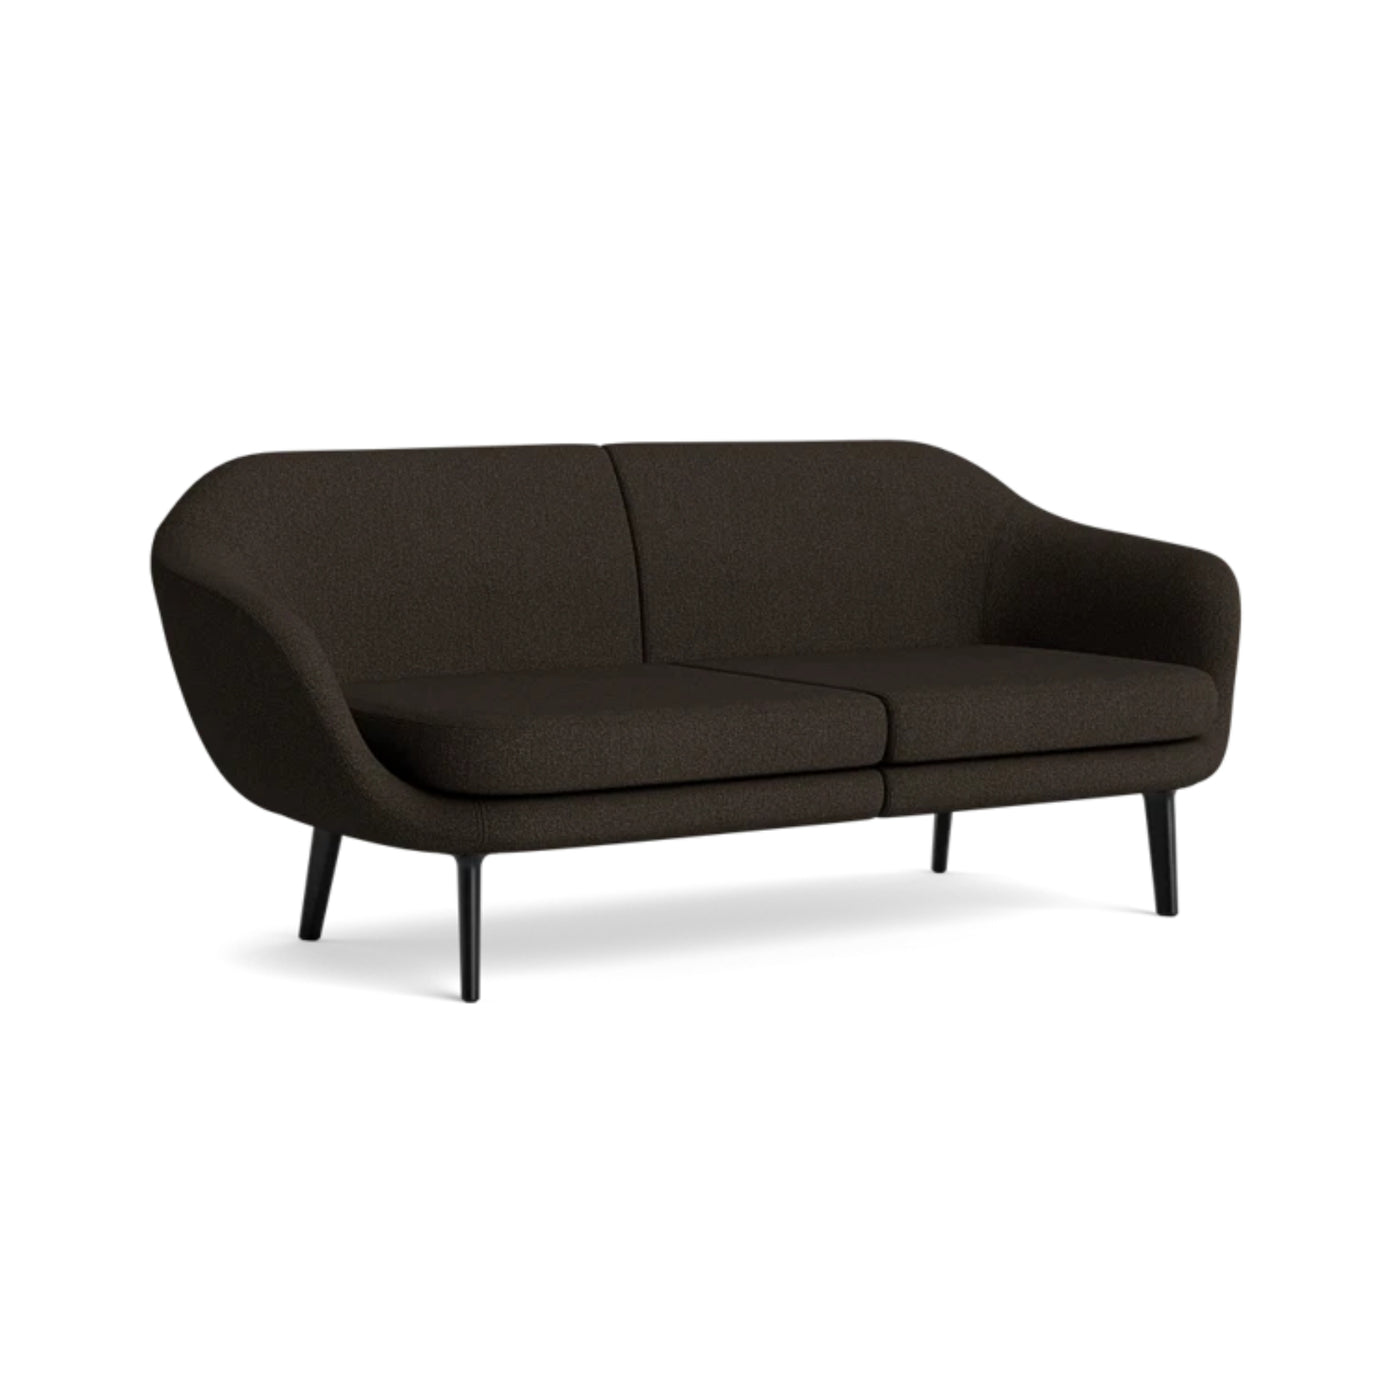 Normann Copenhagen Sum Modular 2 Seater Sofa. Made to order from someday designs. #colour_hallingdal-376